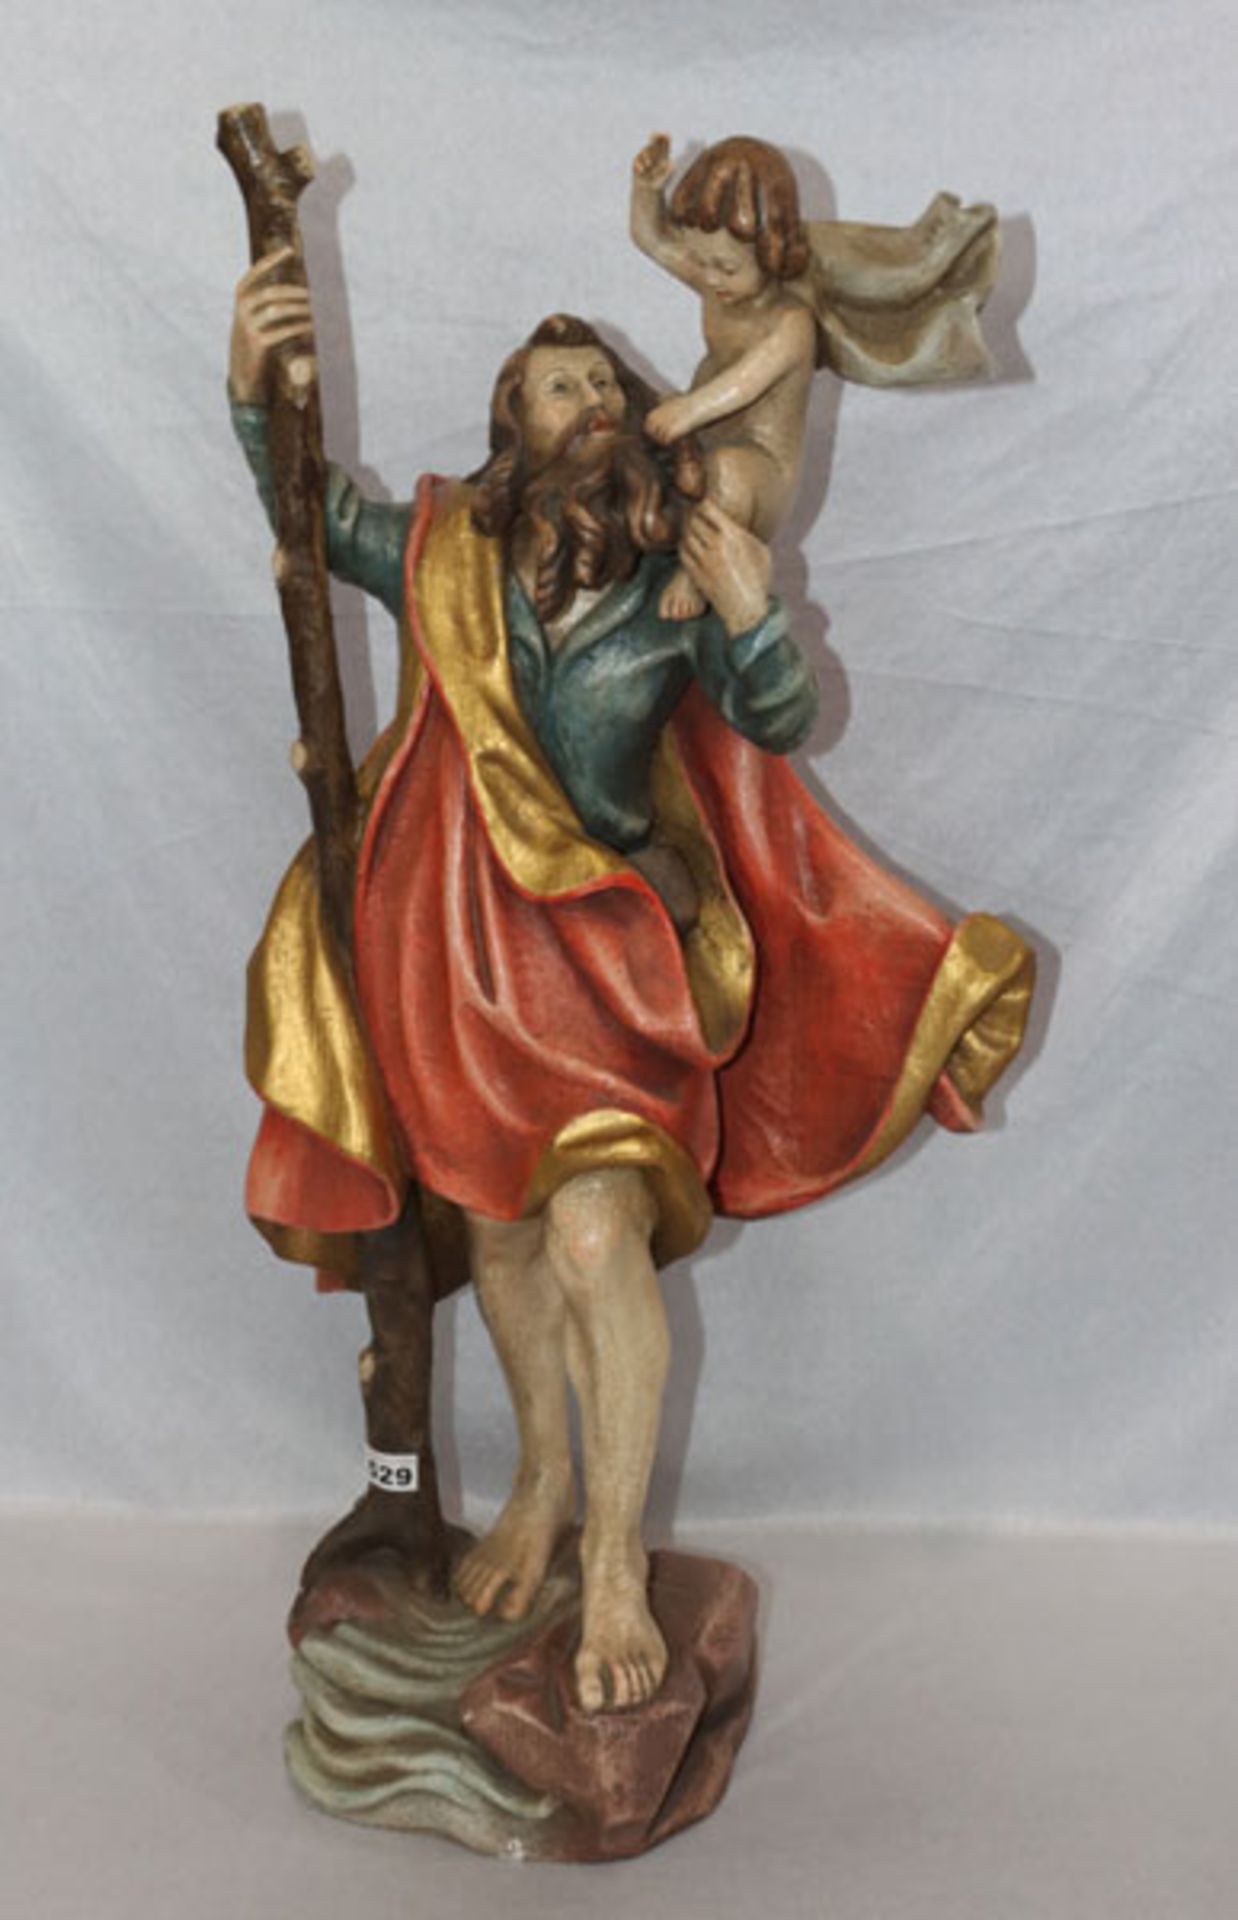 Holz Figurenskulptur 'Hl. Christophorus', am Boden signiert St. Flesser, Meran 1980, farbig